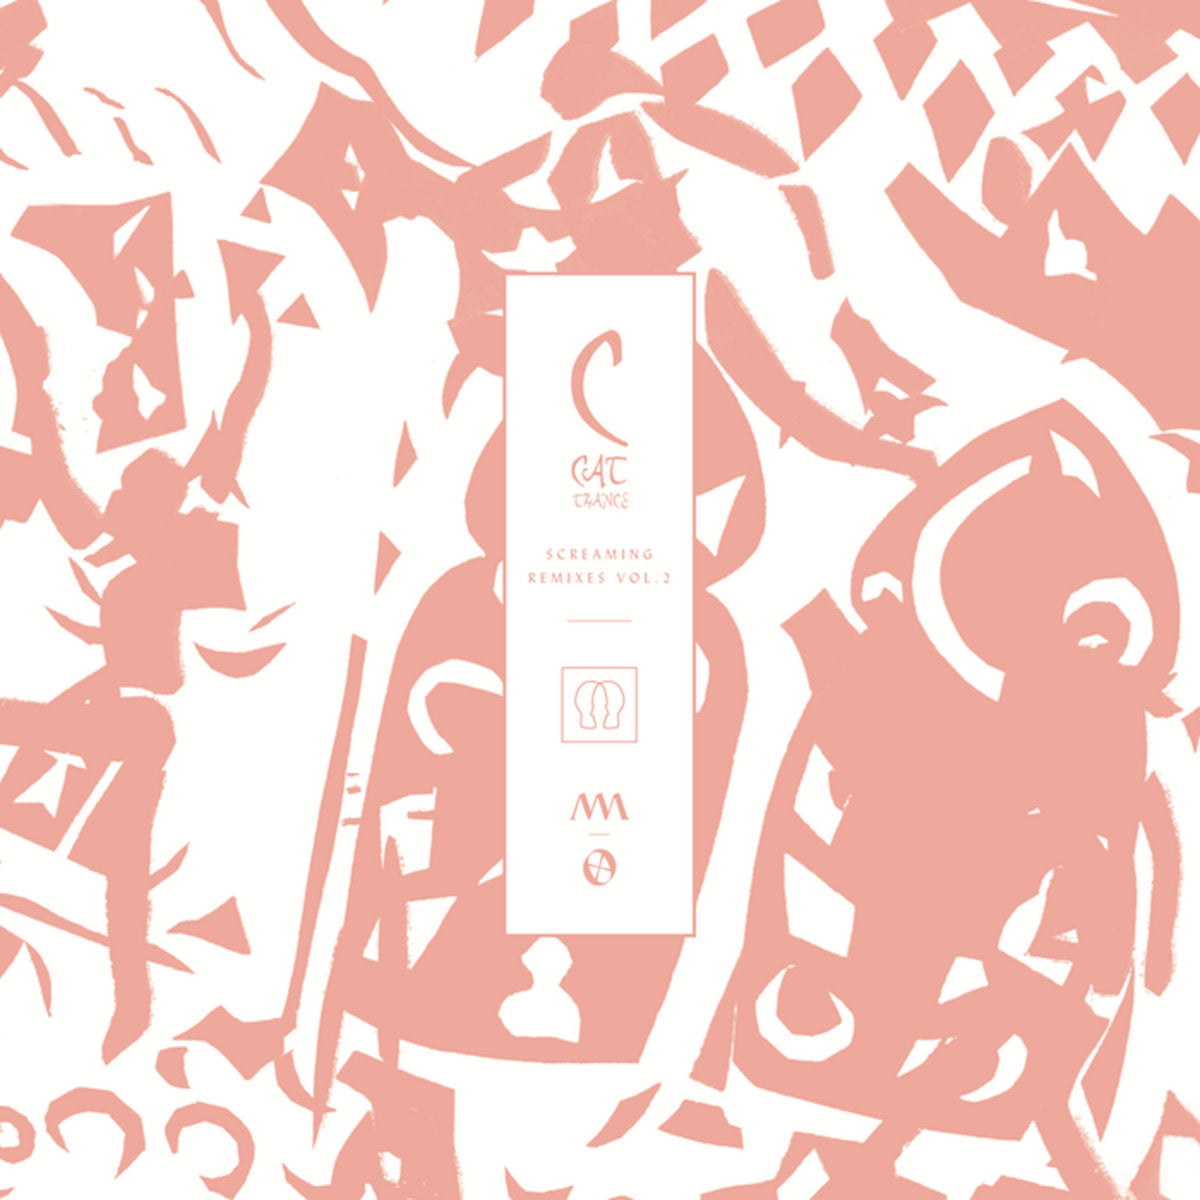 C Cat Trance – Screaming Remixes Vol. 2 (Red Axes / Prins Thomas / Borusiade)